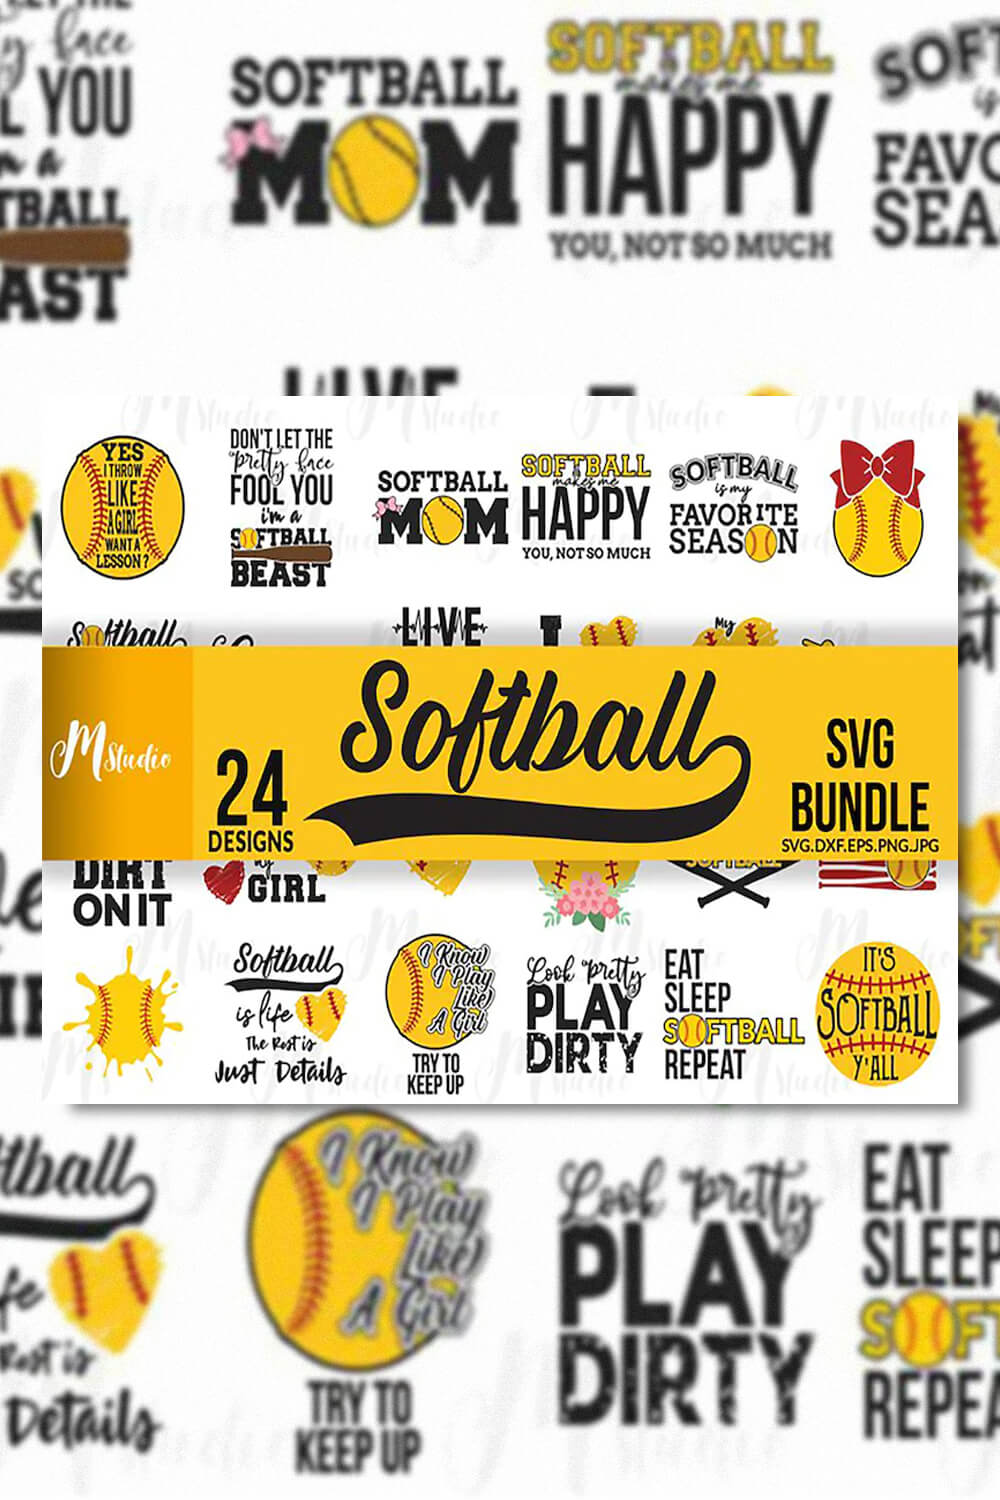 One of Softball design with inscription "Softball makes me happy".